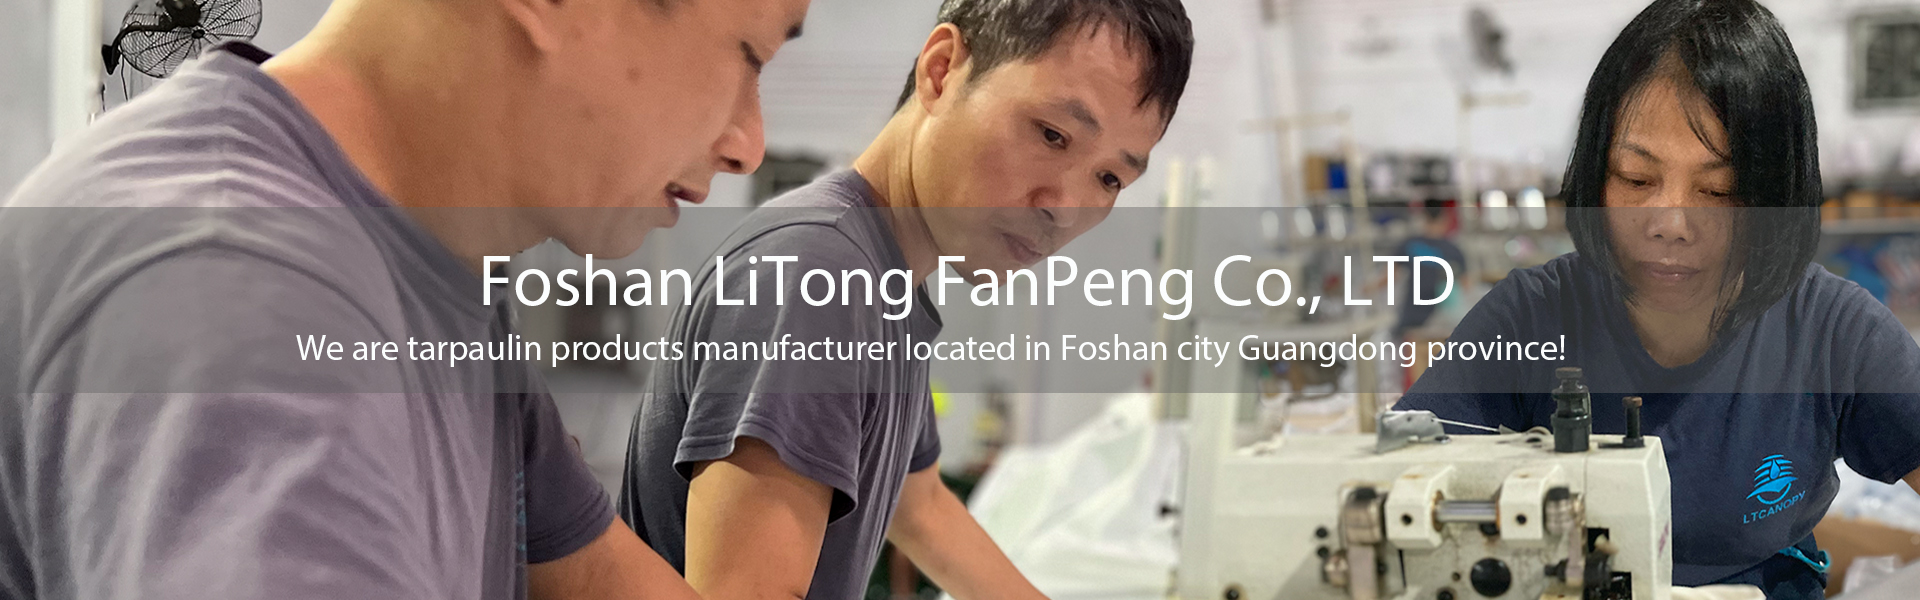 Foshan LiTong FanPeng Co., LTD,tarpaulin manufacturer 